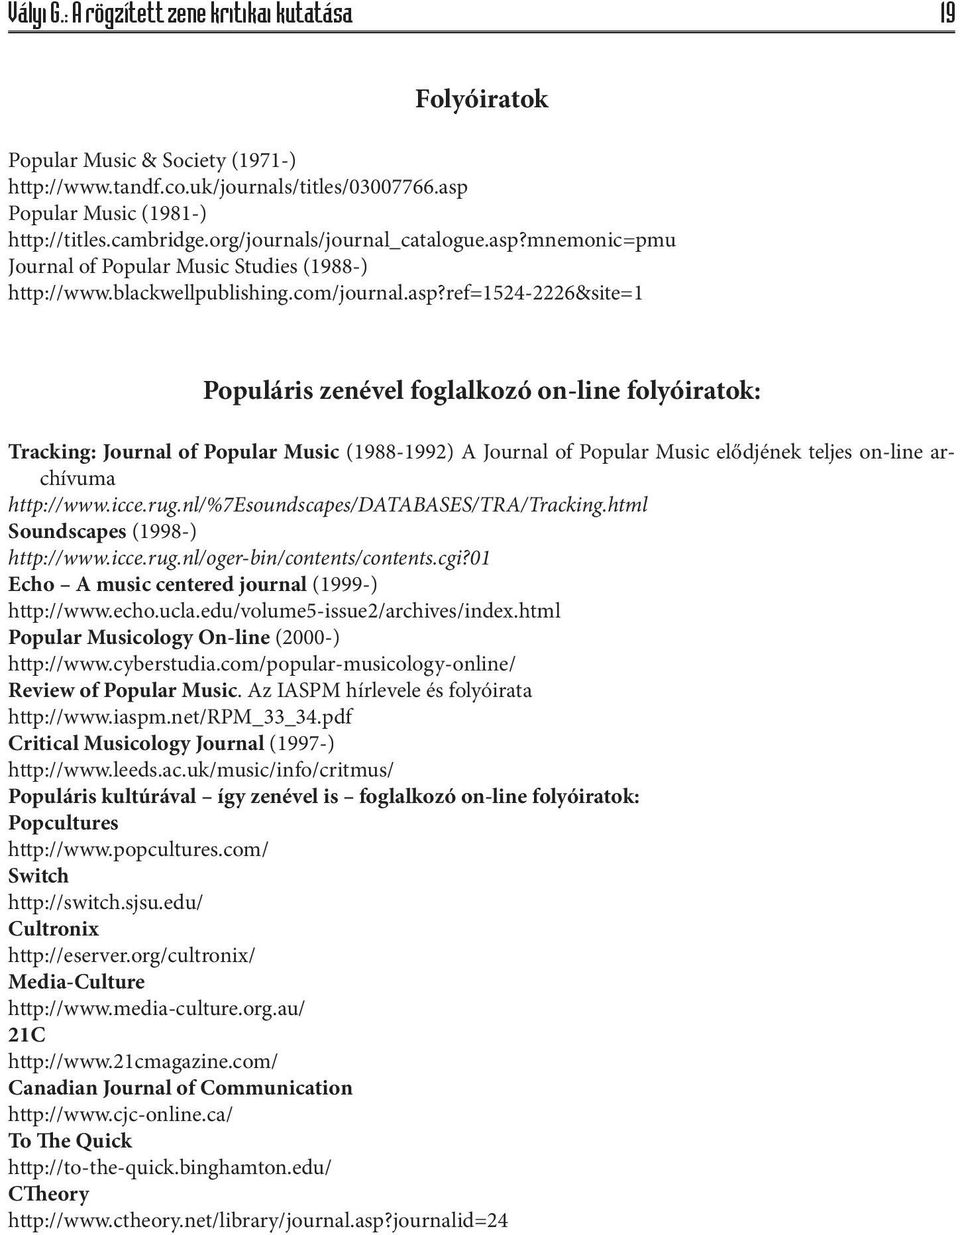 mnemonic=pmu Journal of Popular Music Studies (1988-) http://www.blackwellpublishing.com/journal.asp?